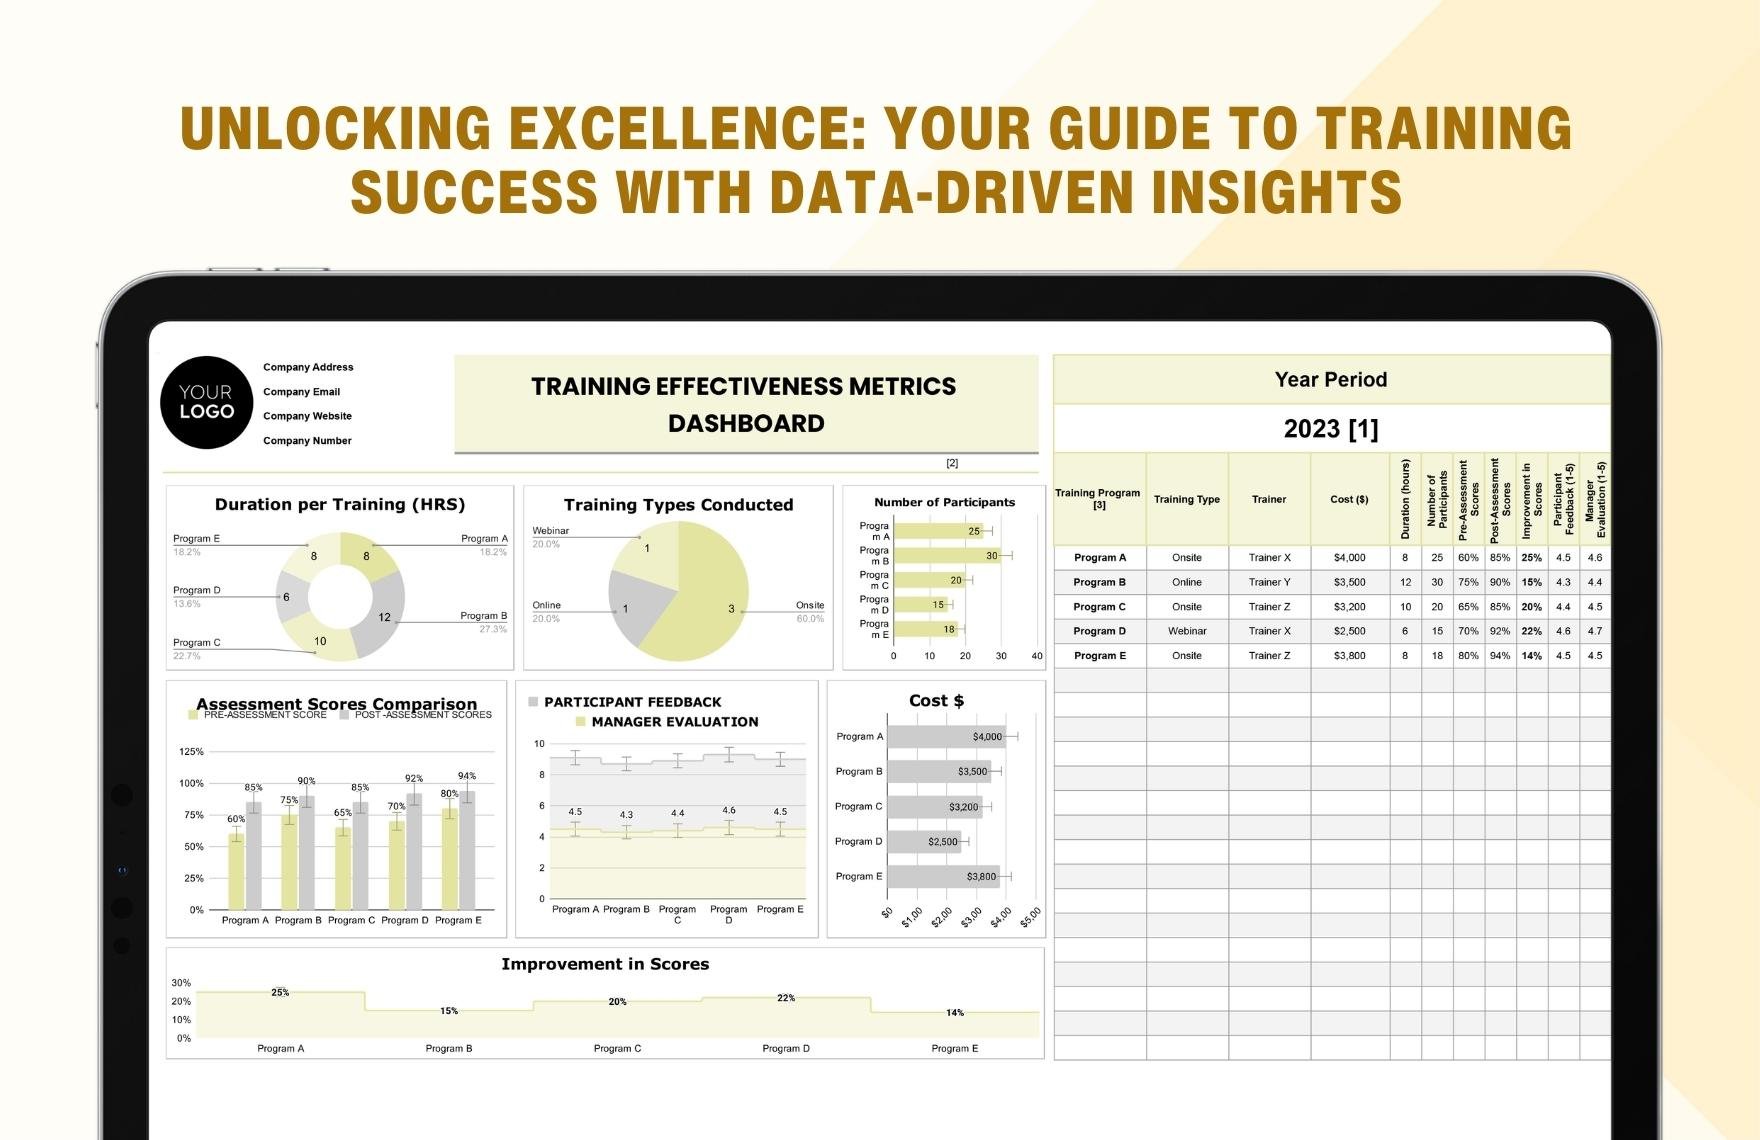 Training Effectiveness Metrics Dashboard HR Template